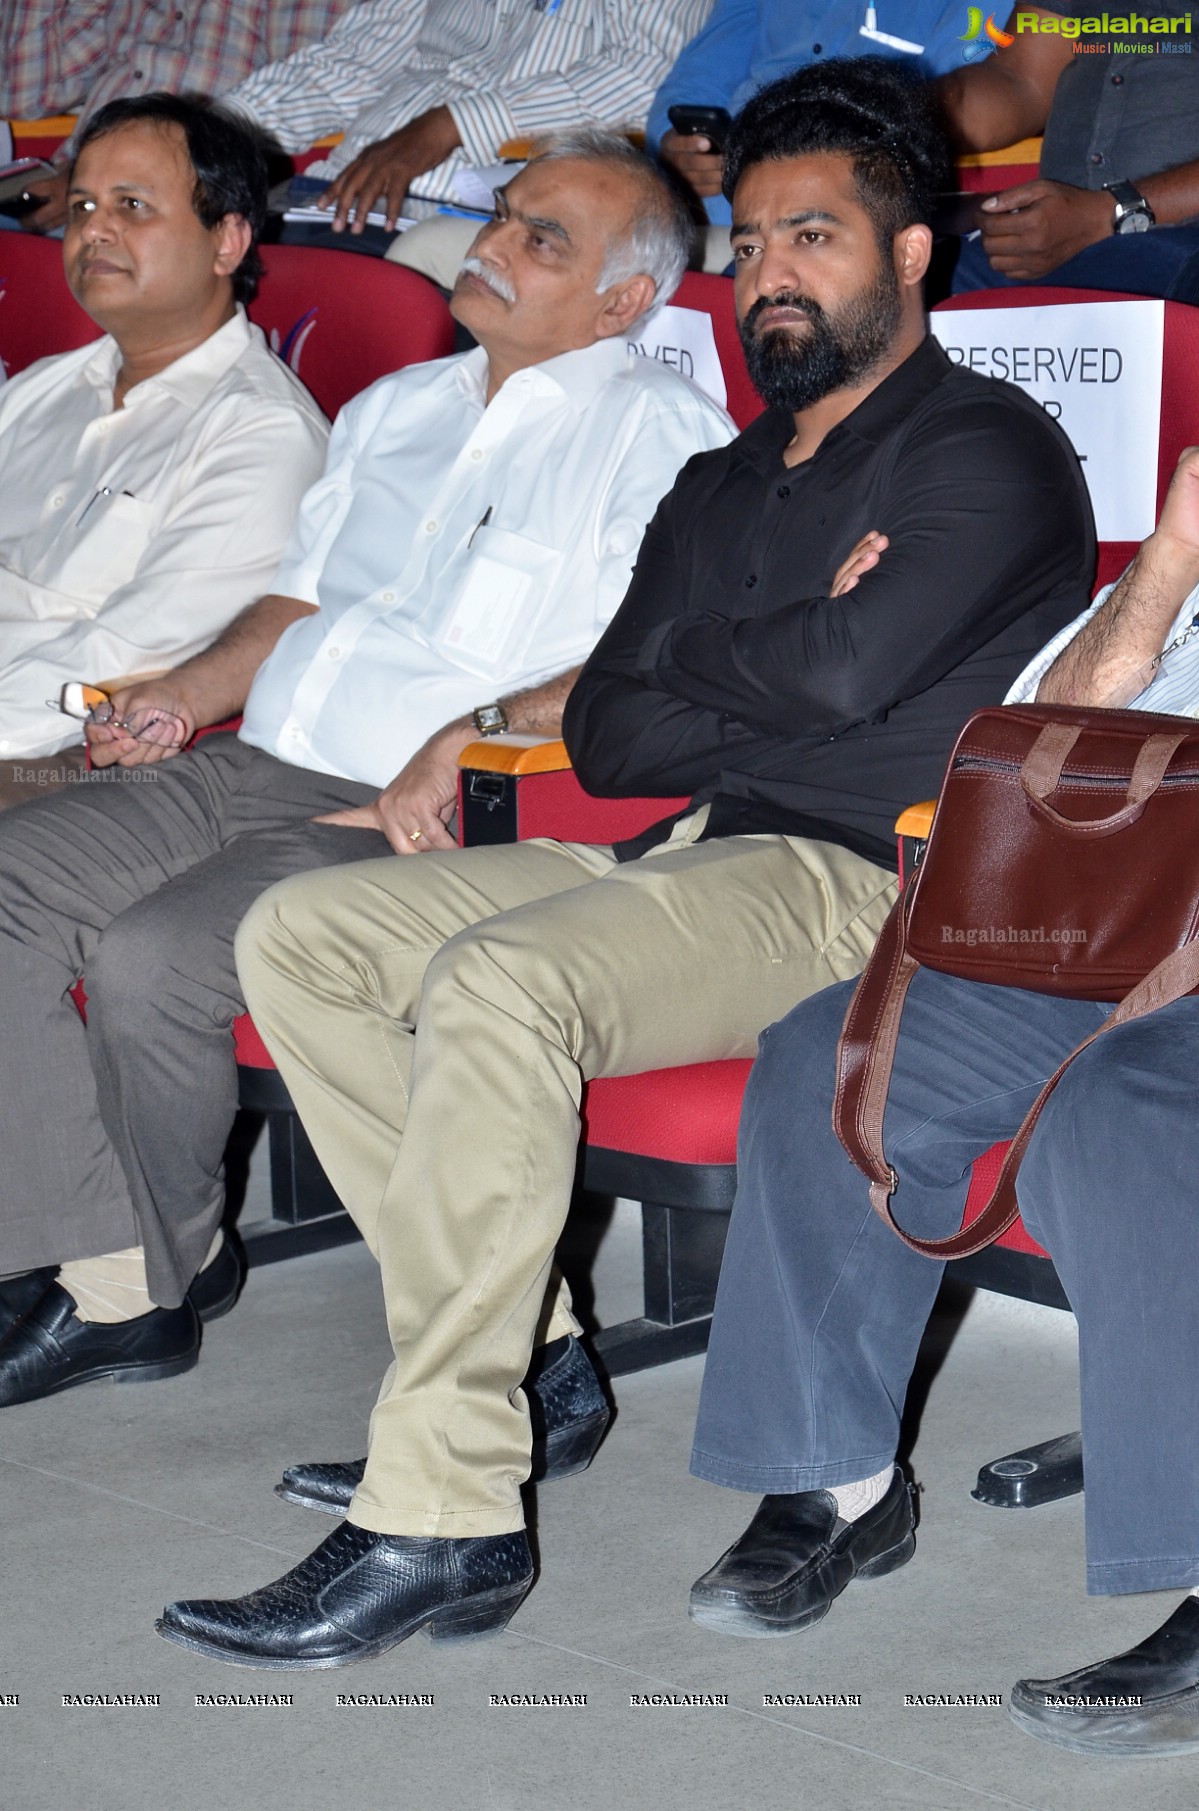 NTR inaugurates KIMS Acute Stroke Unit, Hyderabad